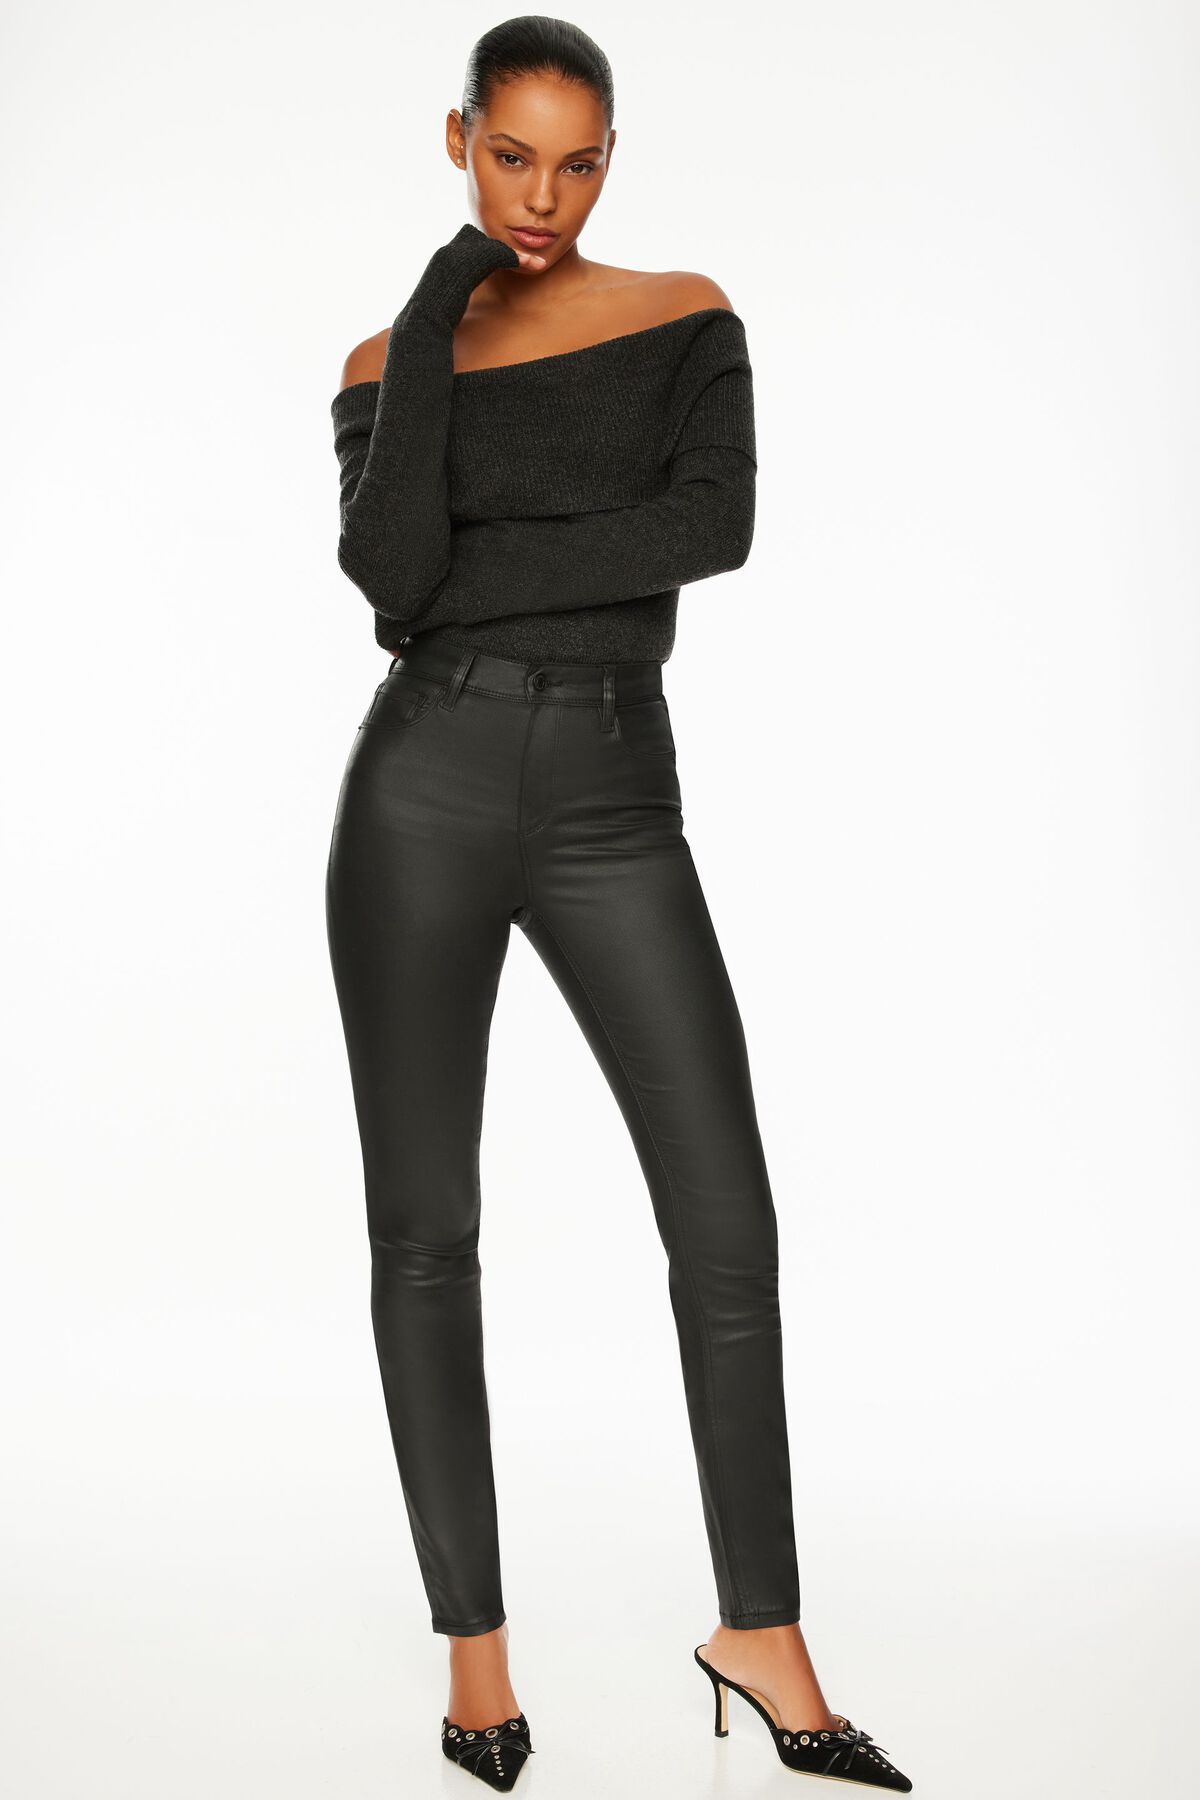 Black PU Coated Skinny Women's Jeans - Rebellious Fashion